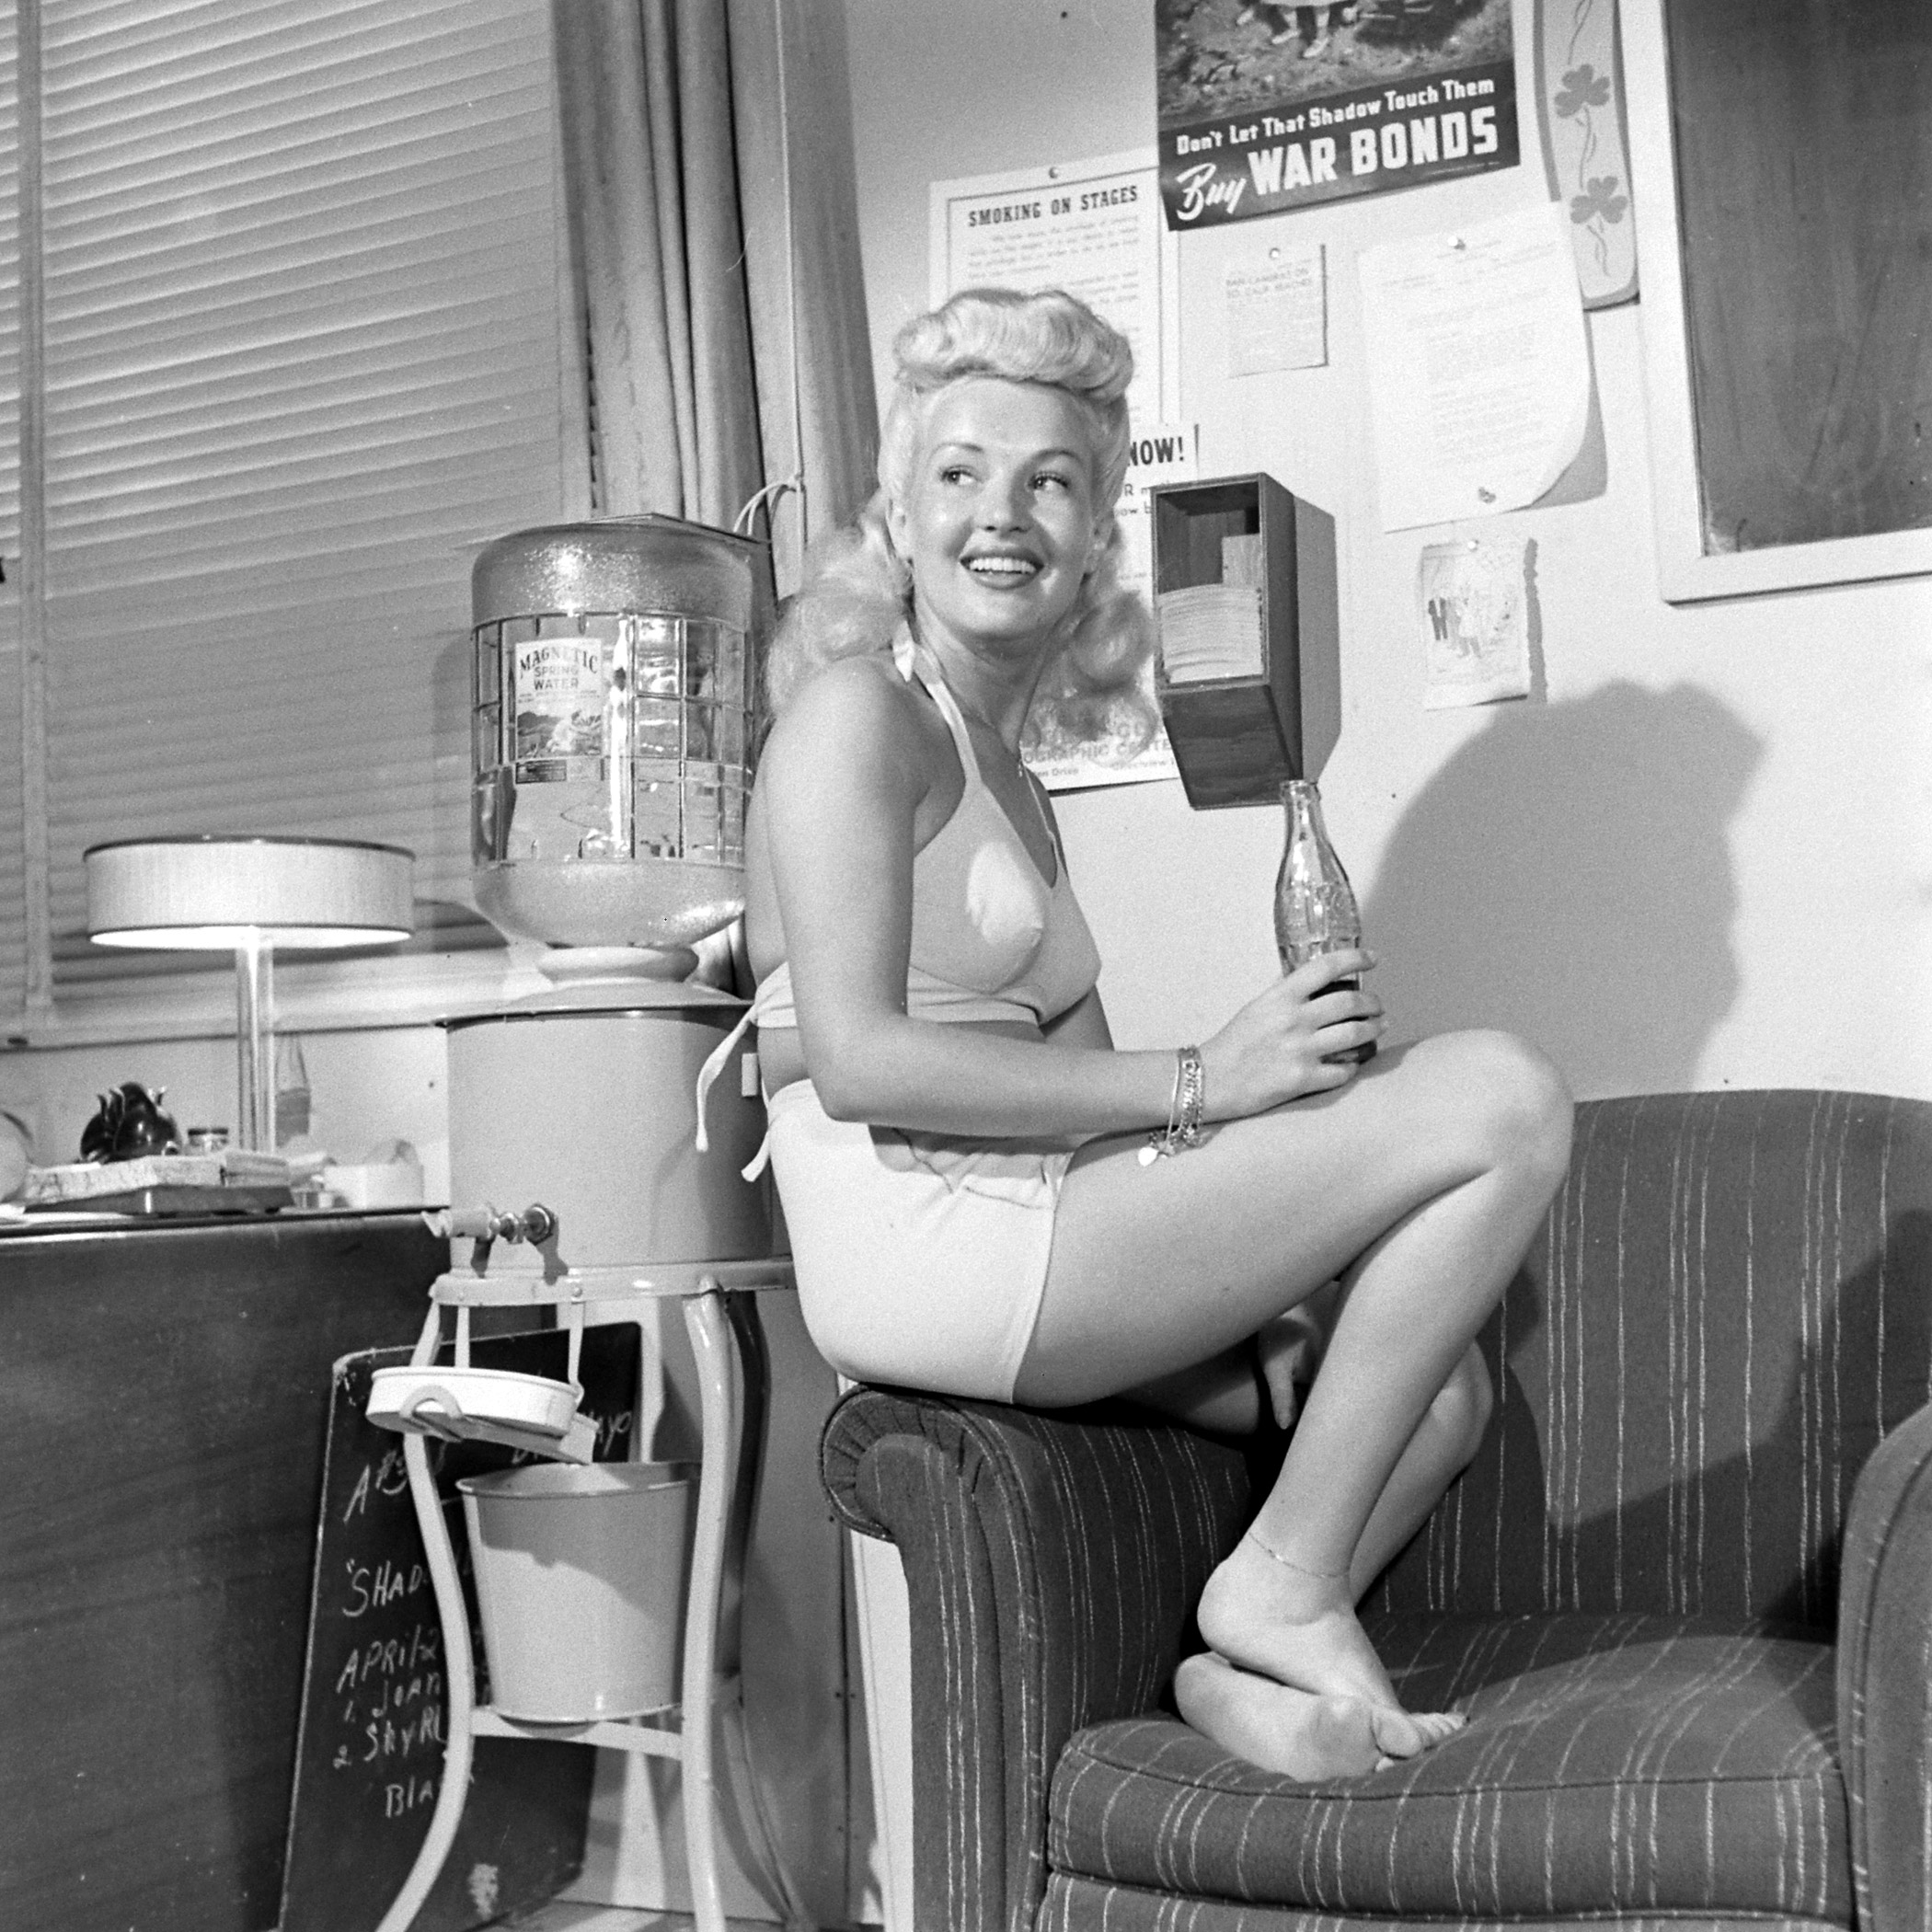 Betty Grable's Hollywood landmark legs, 1943.